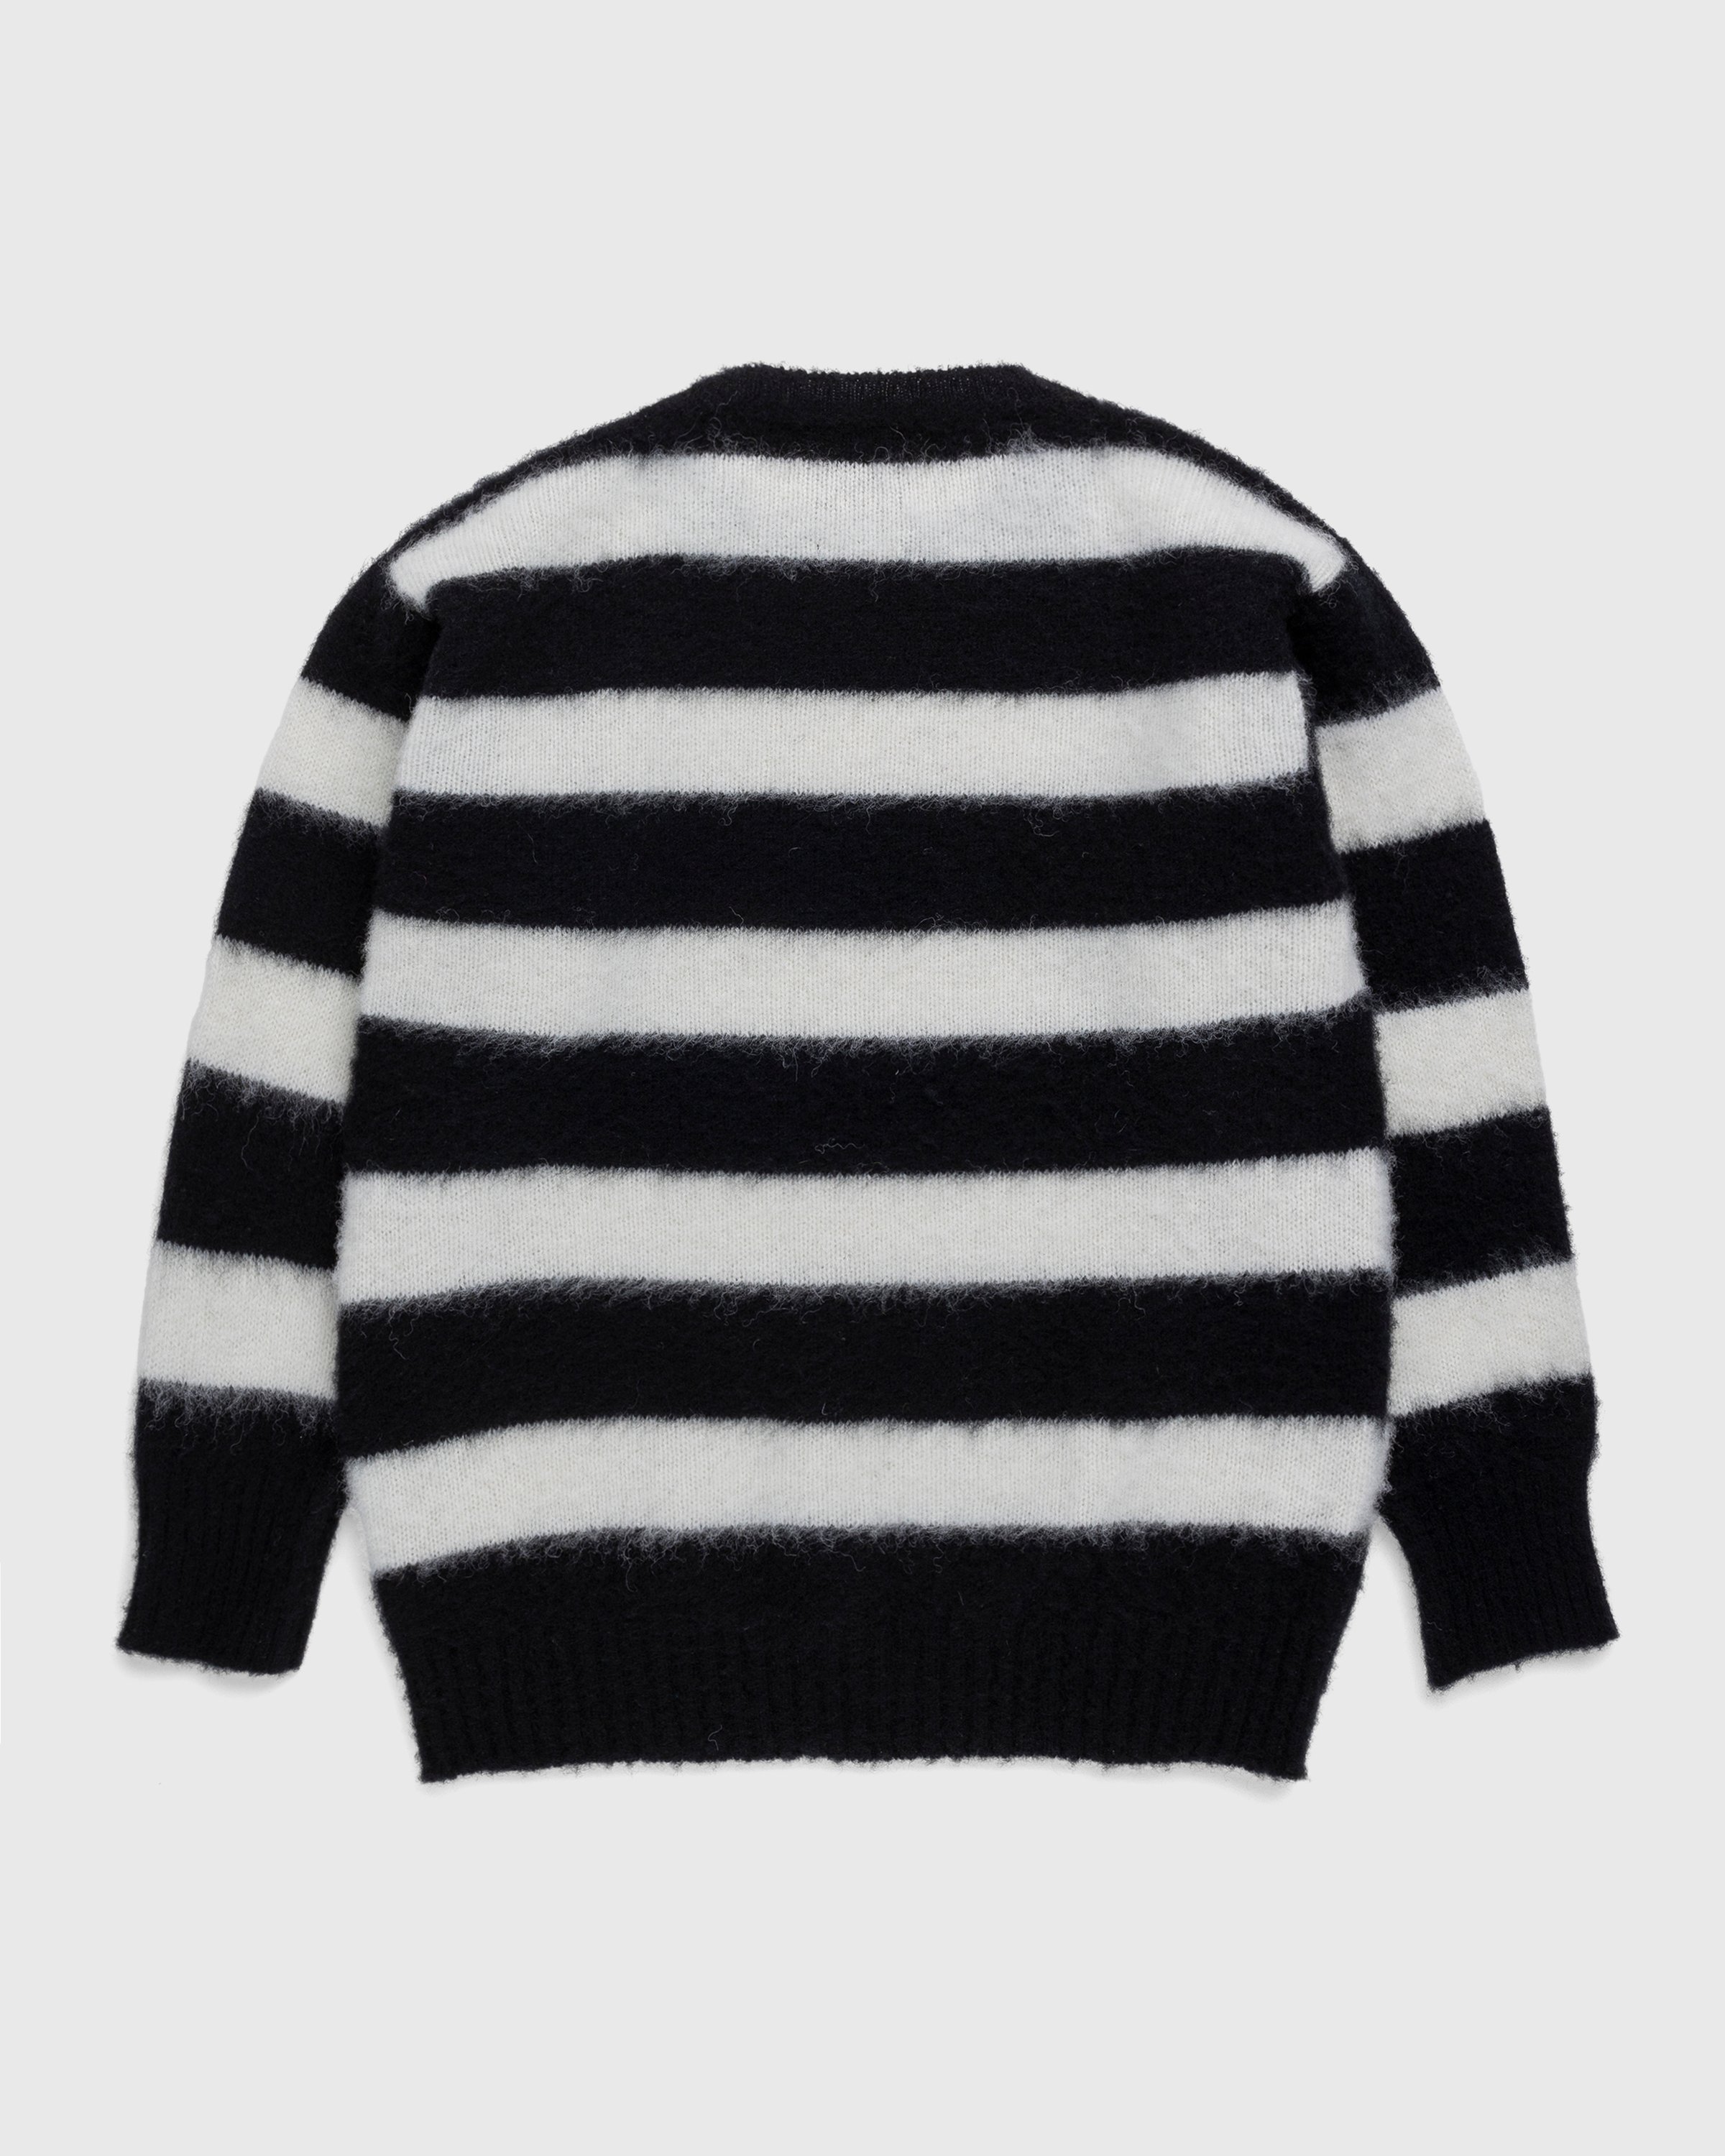 J. Press x Highsnobiety - Shaggy Dog Stripe Sweater Black/Cream - Clothing - Multi - Image 2